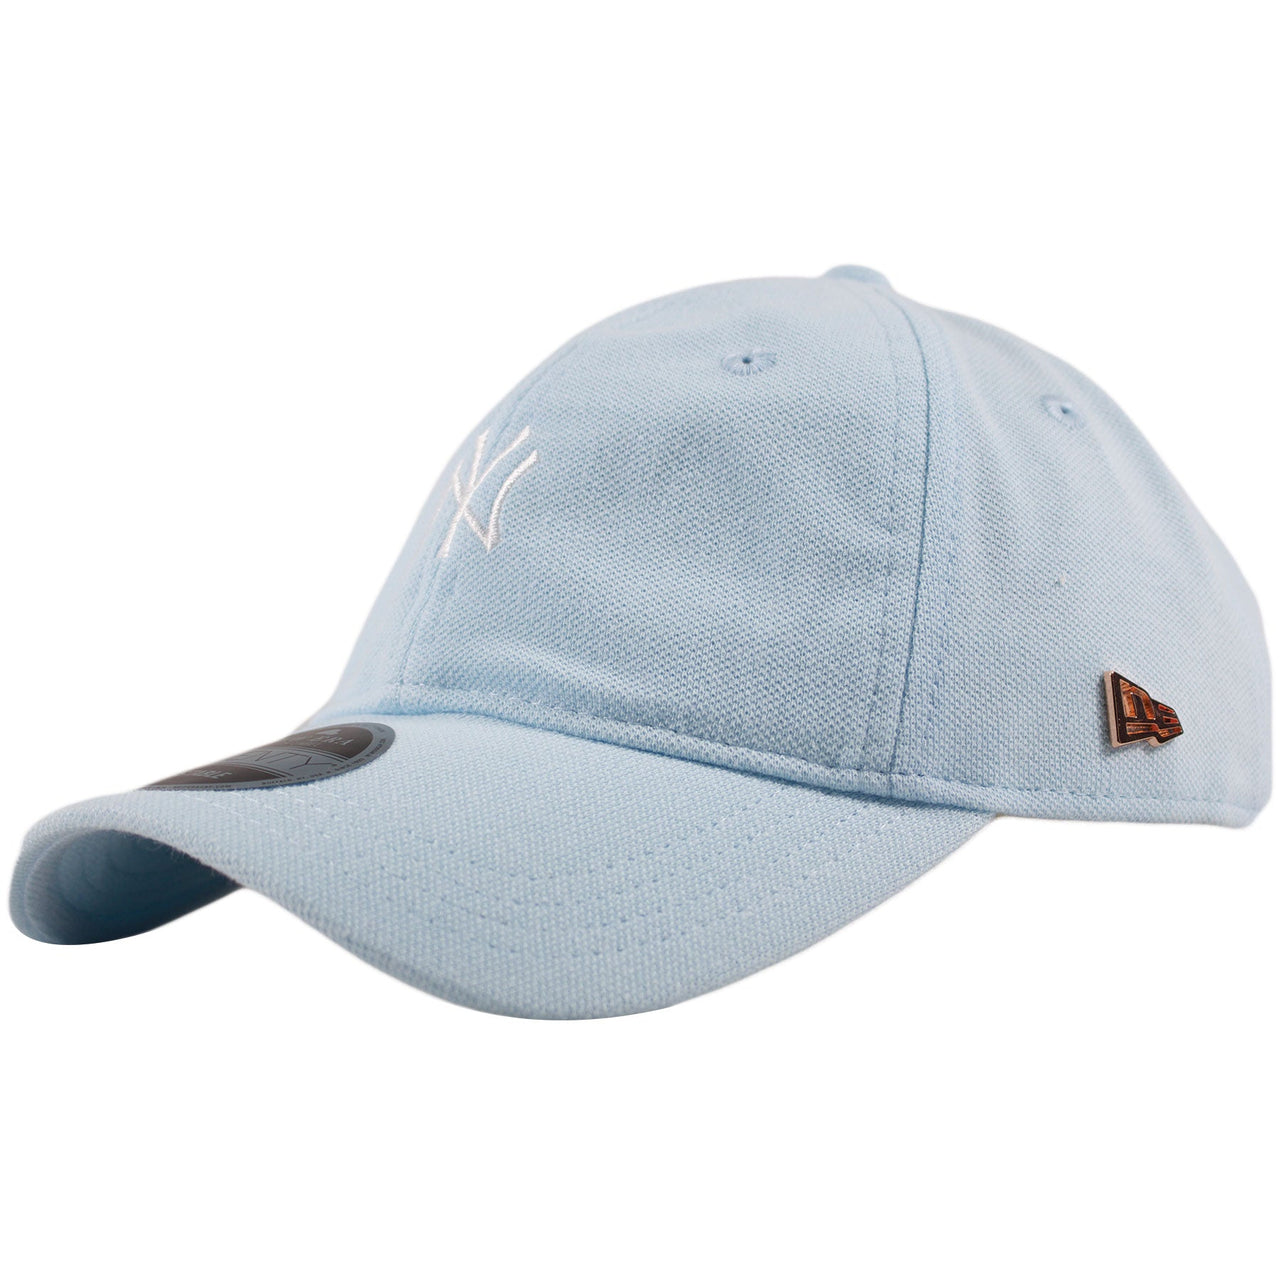 New York Yankees Black Label Micro Stitch Premium Light Blue Adjustable Dad Hat